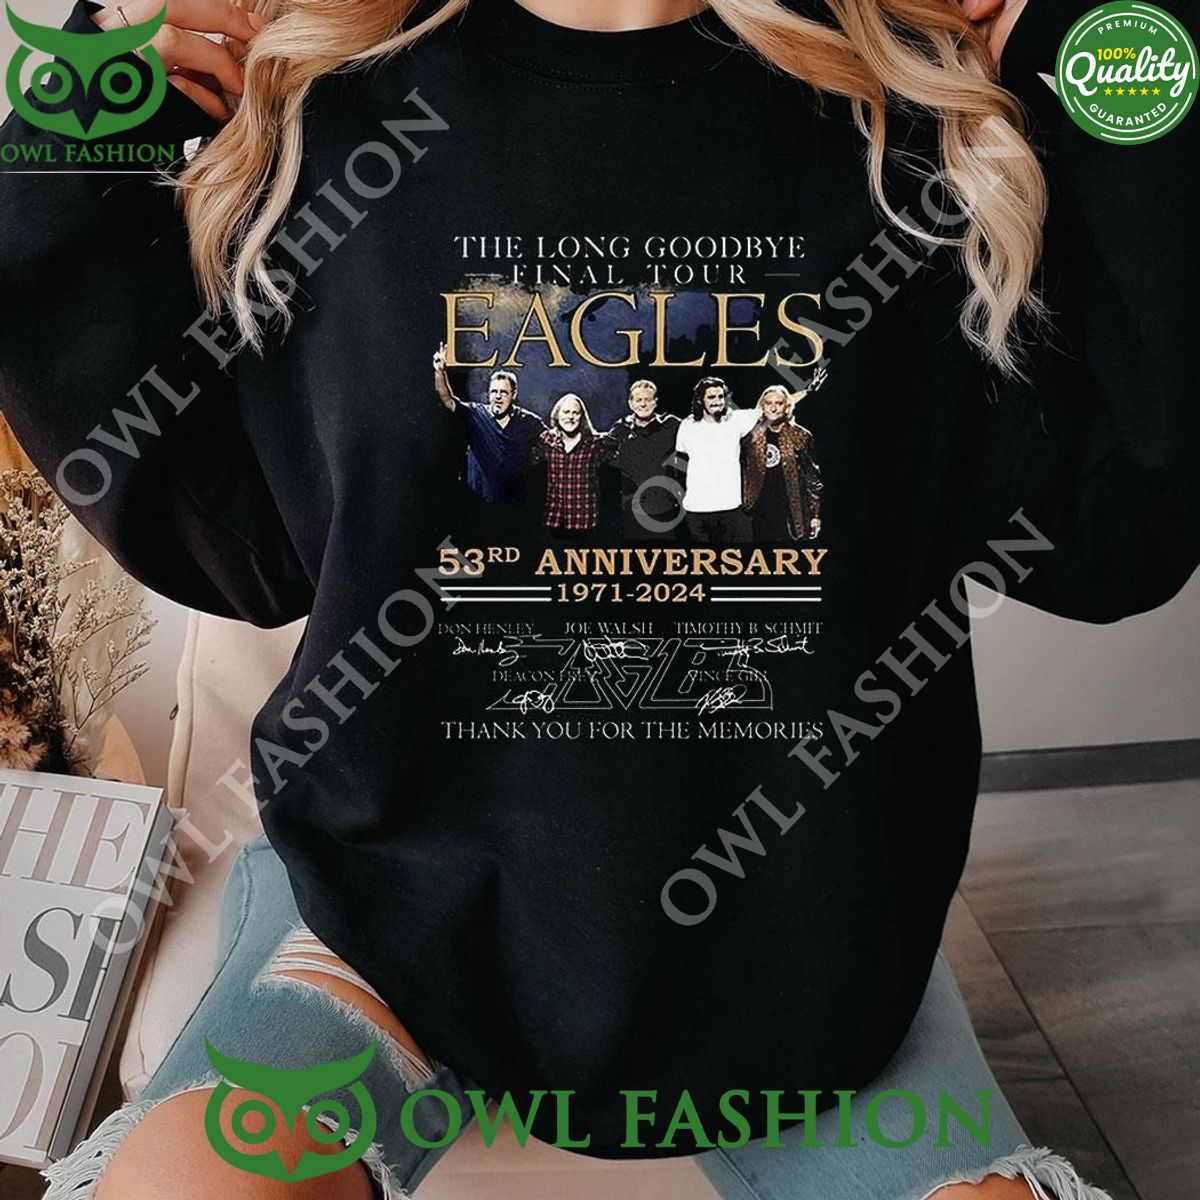 53rd anniversary the long goodbye final tour eagles 1971 2024 t shirt hoodie 1 RNHhV.jpg